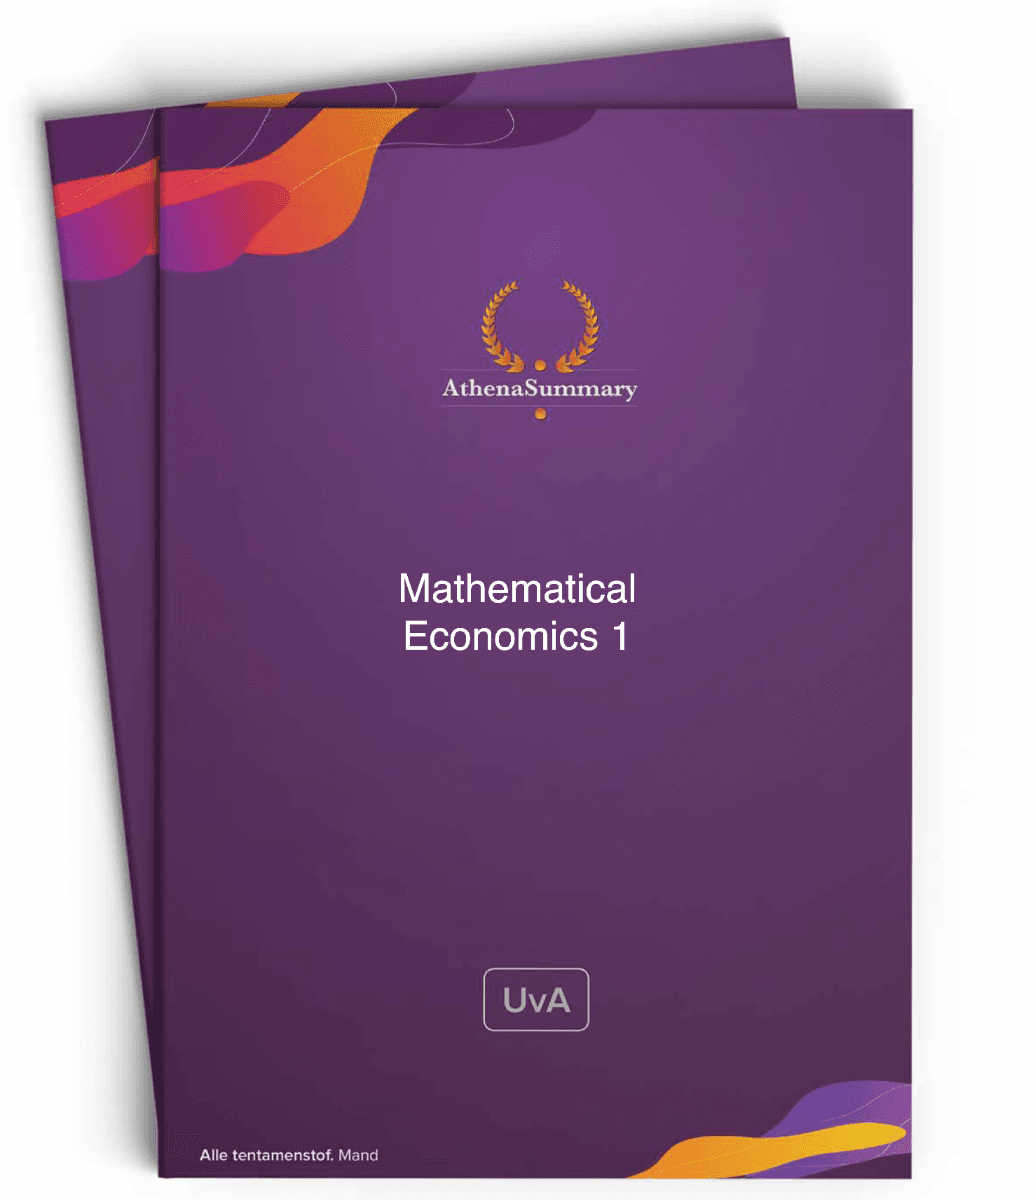 Literature Summary: Mathematical Economics 1